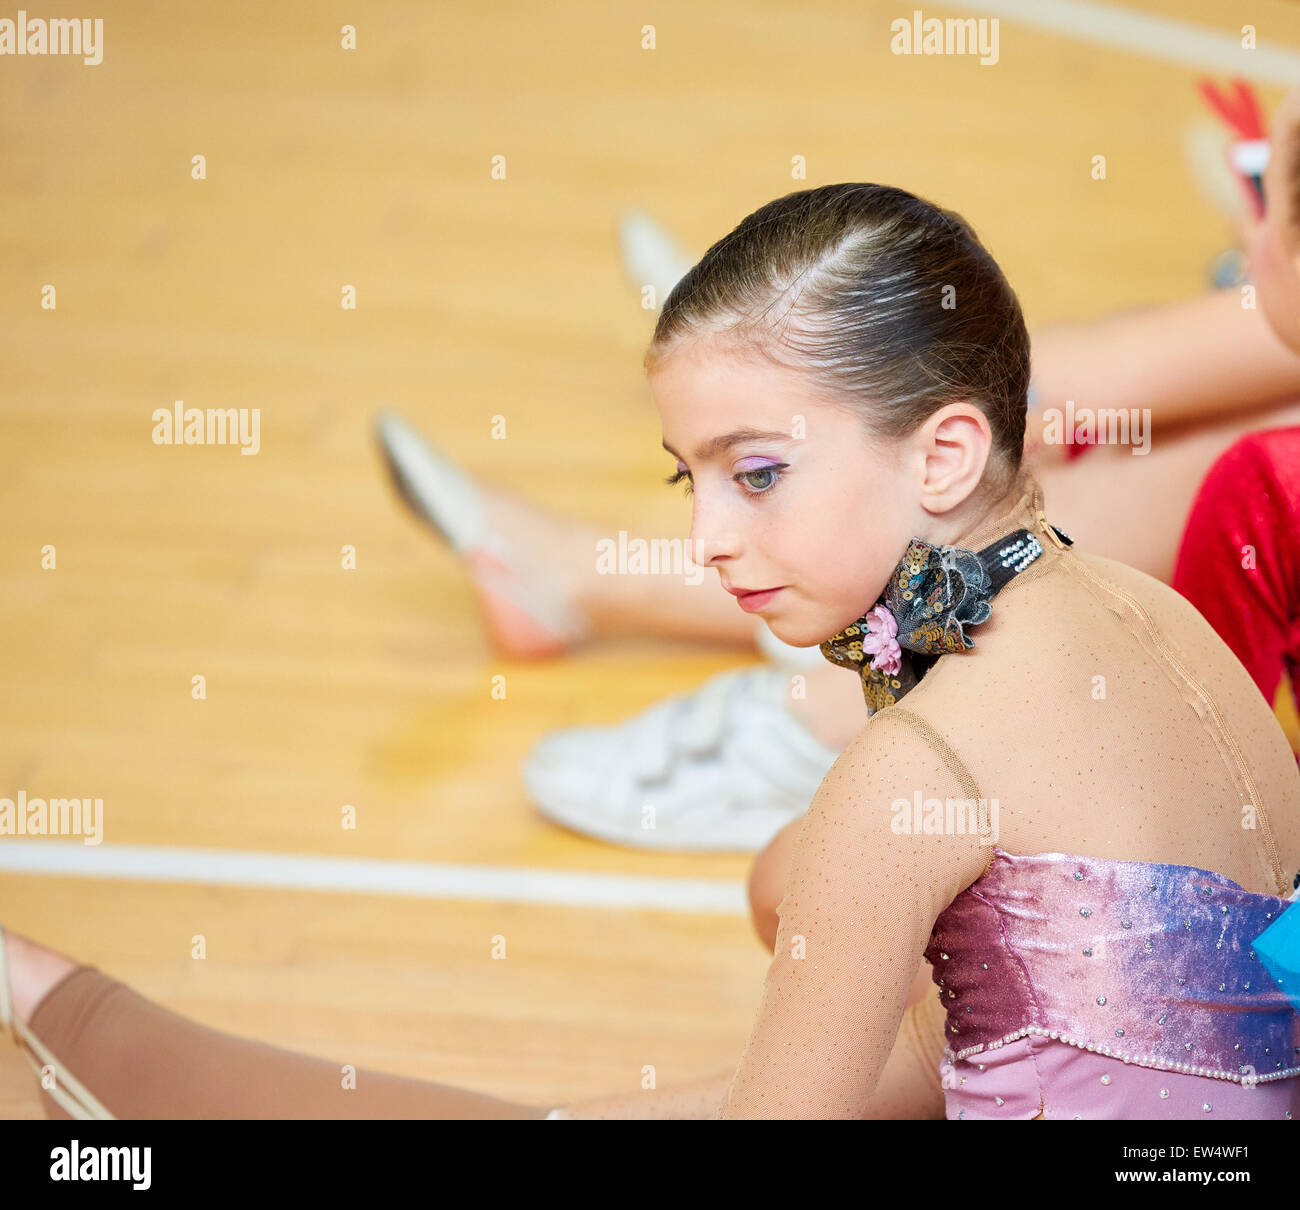 Girl rhythmic gymnastics hi-res stock photography and images - Alamy